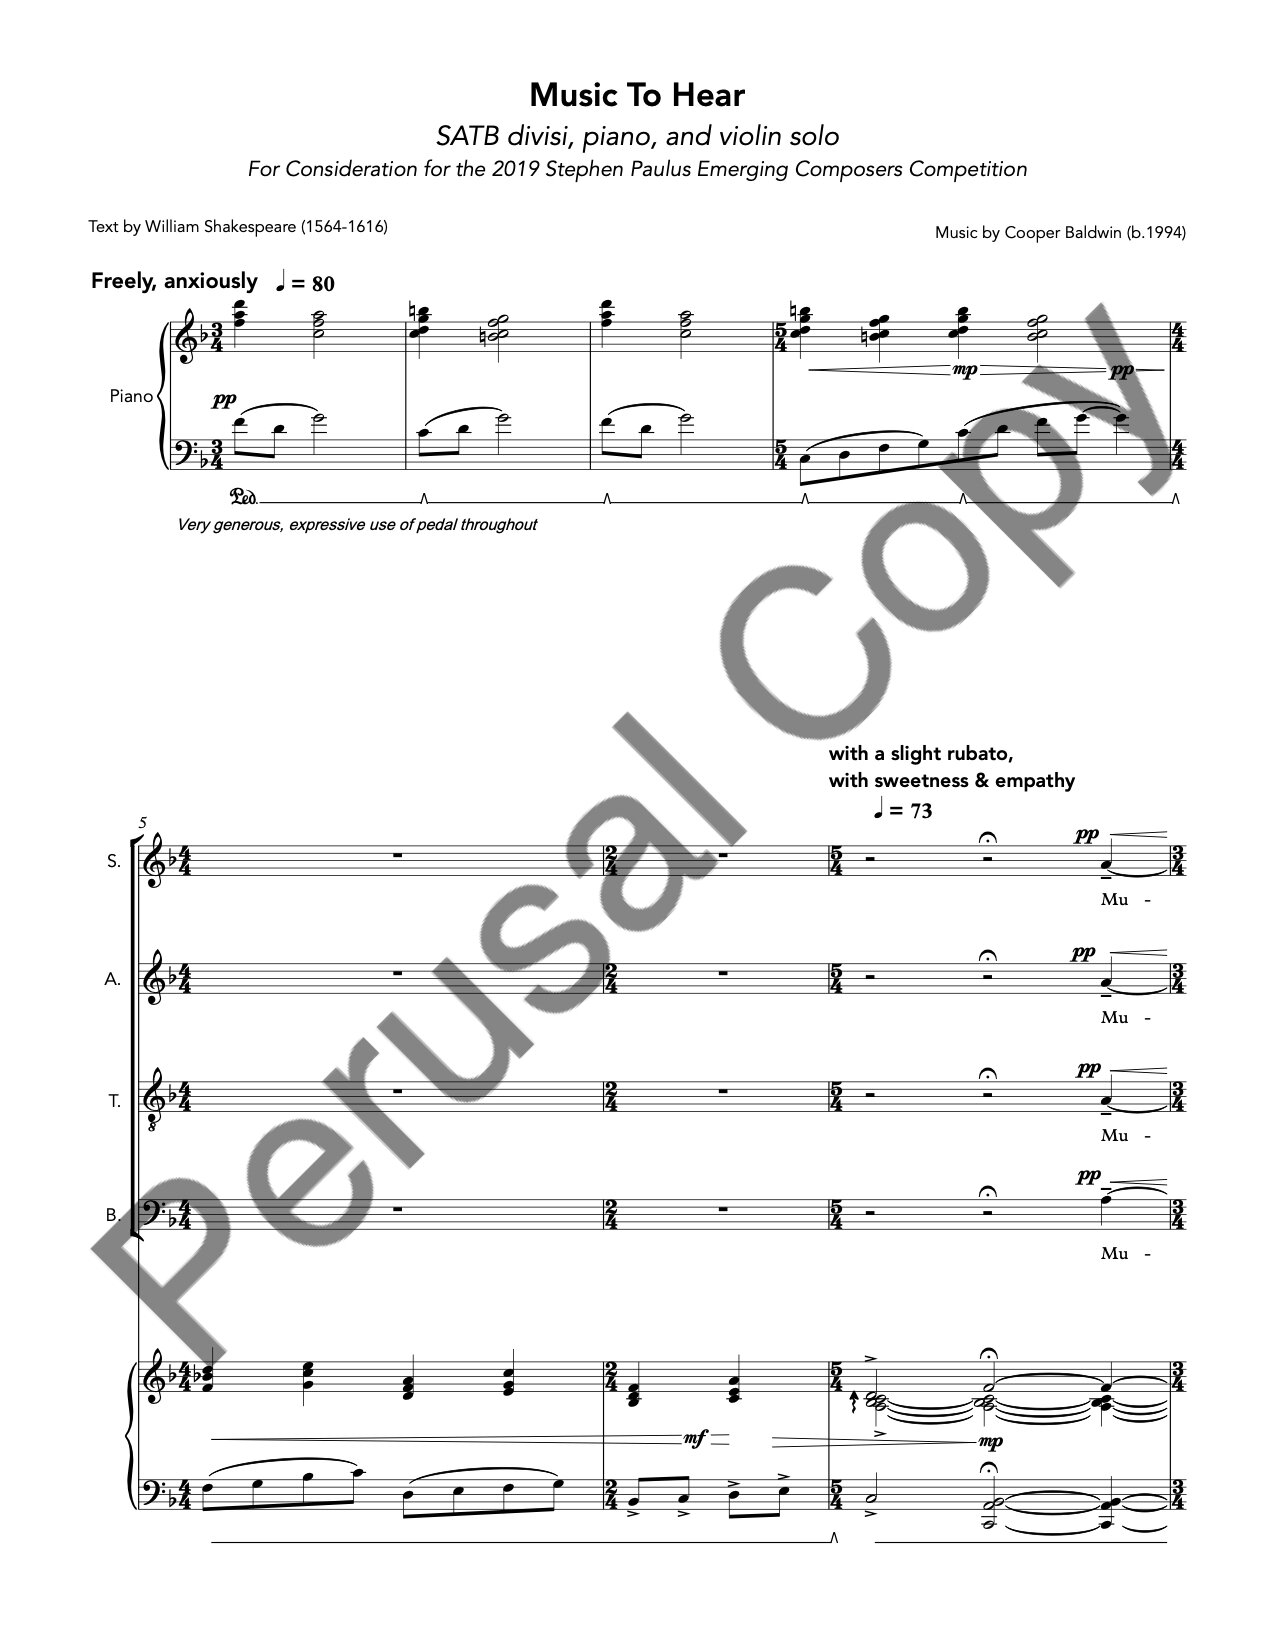 Music To Hear - Perusal Copy 2.jpg